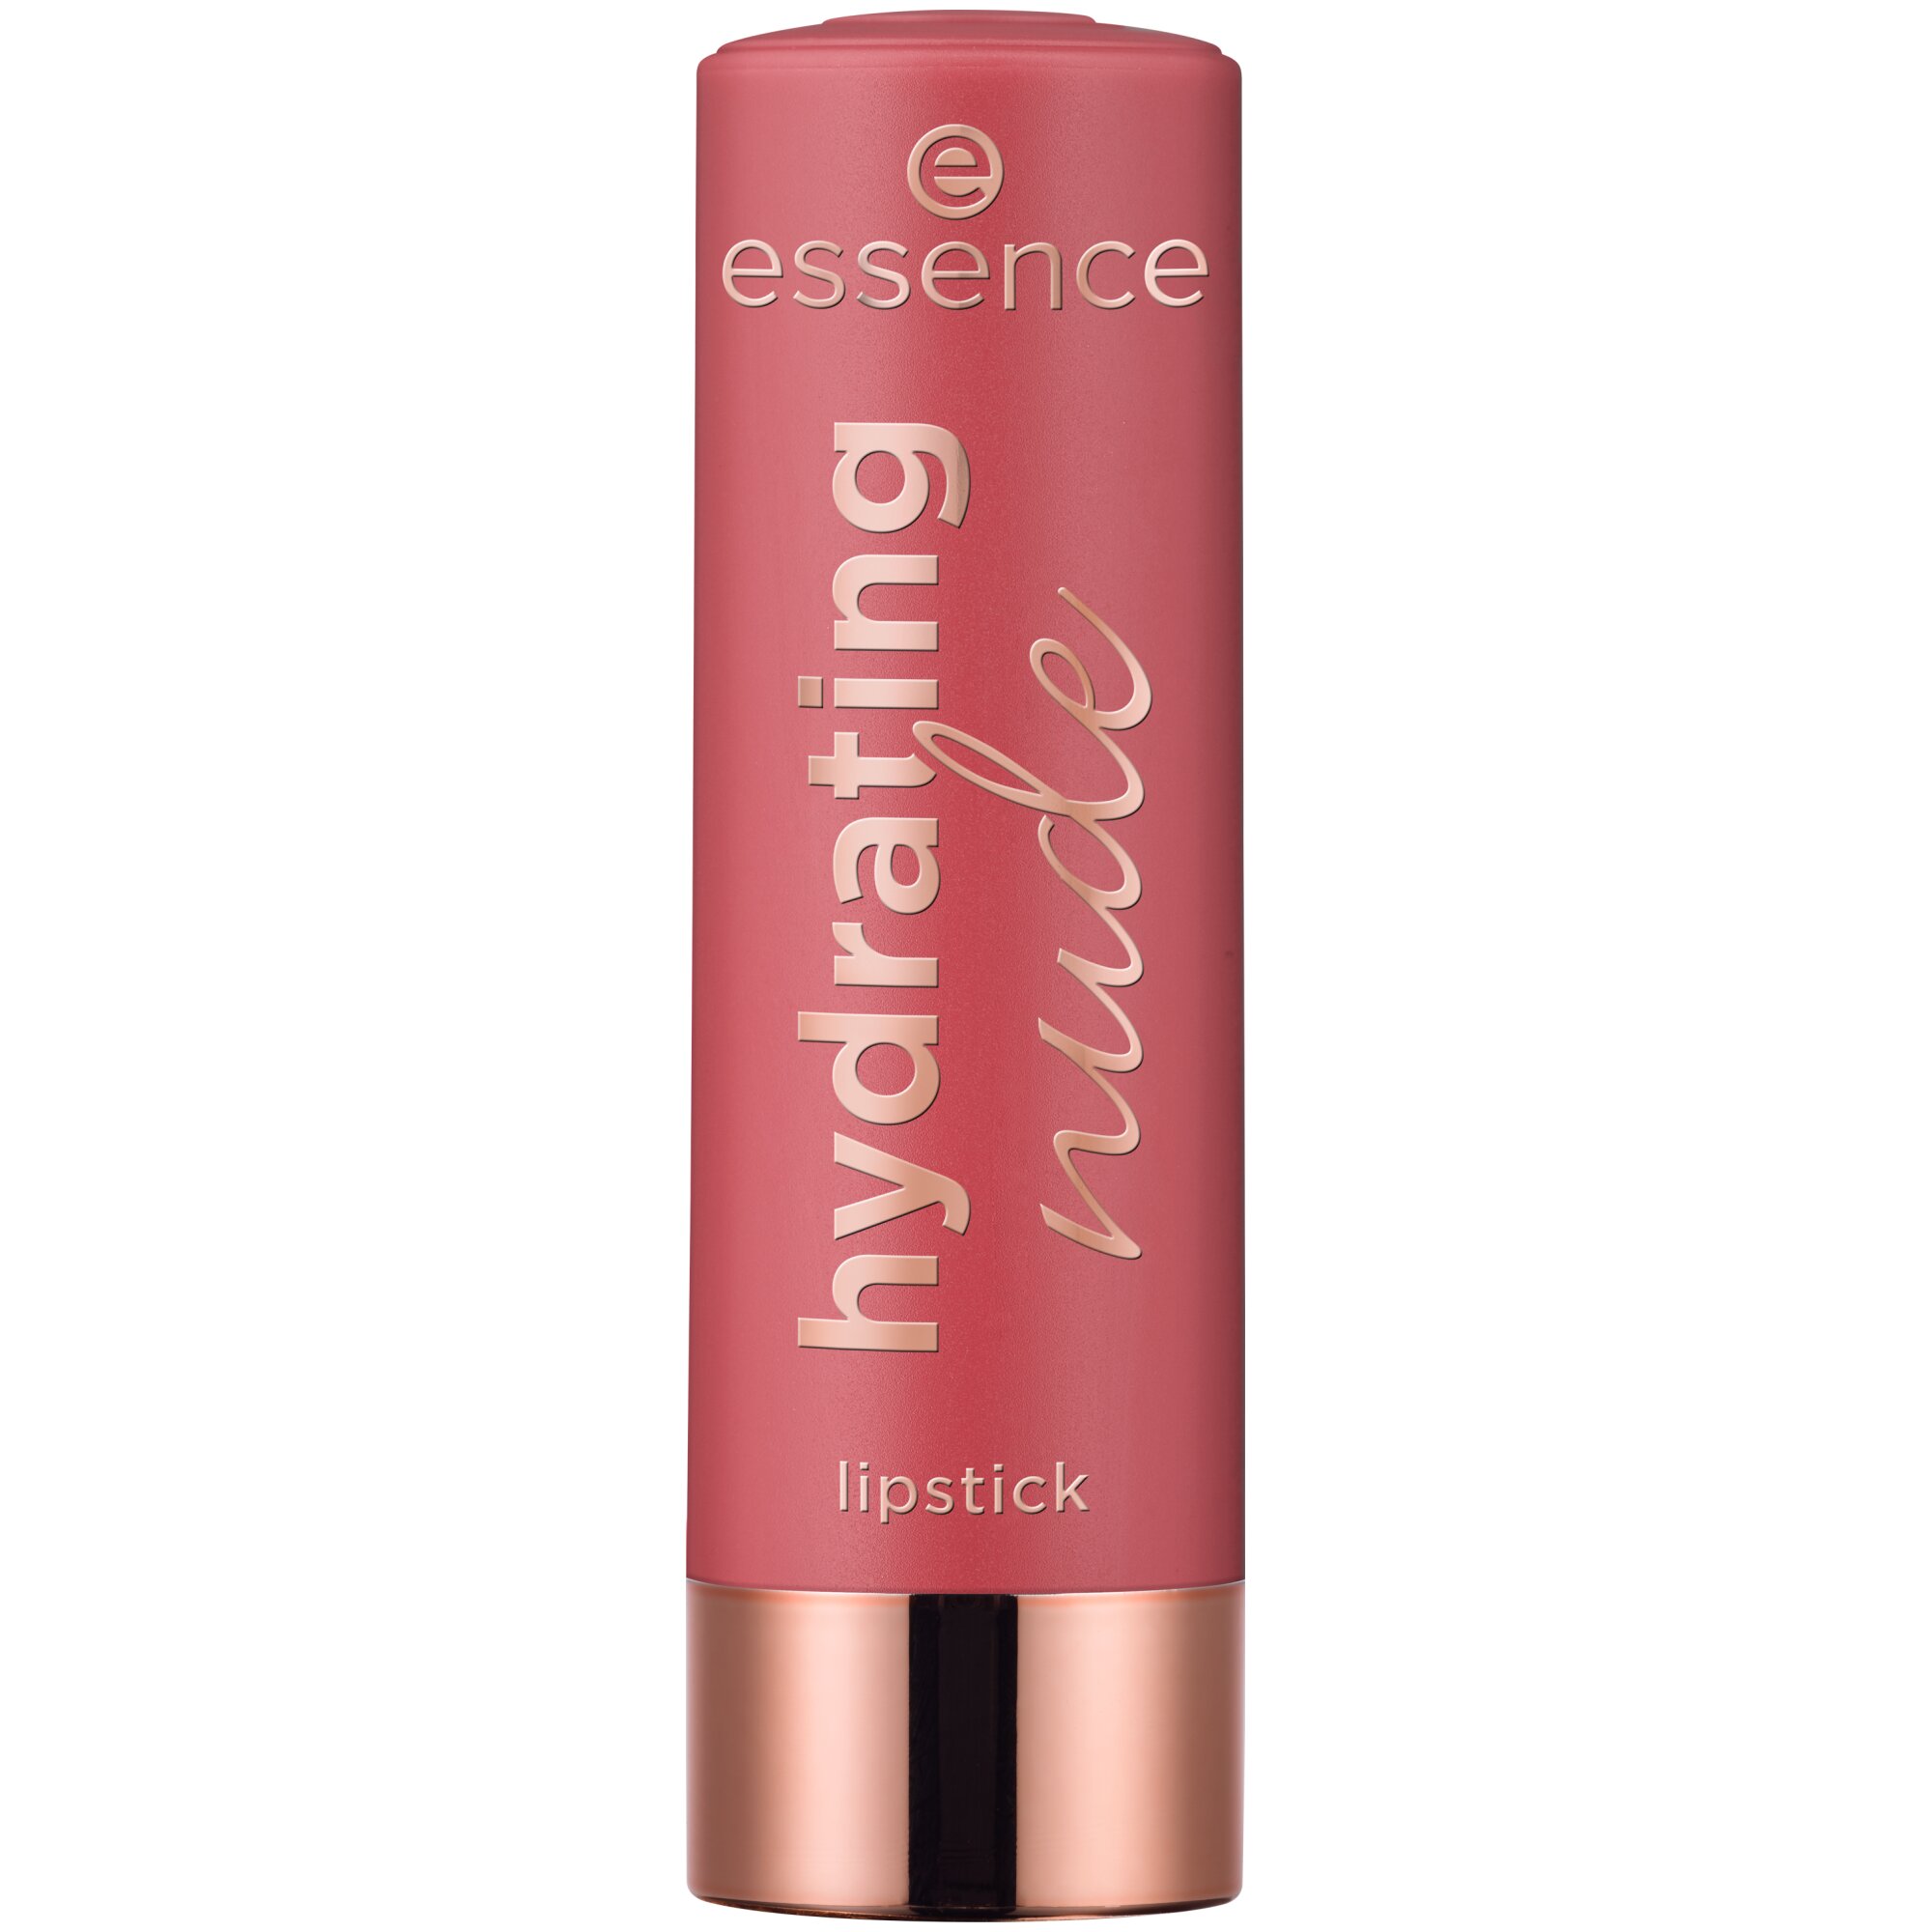 Ruj hidratant Hydrating Nude Lipstick, 303 - Delicate, 3.5 g, Essence